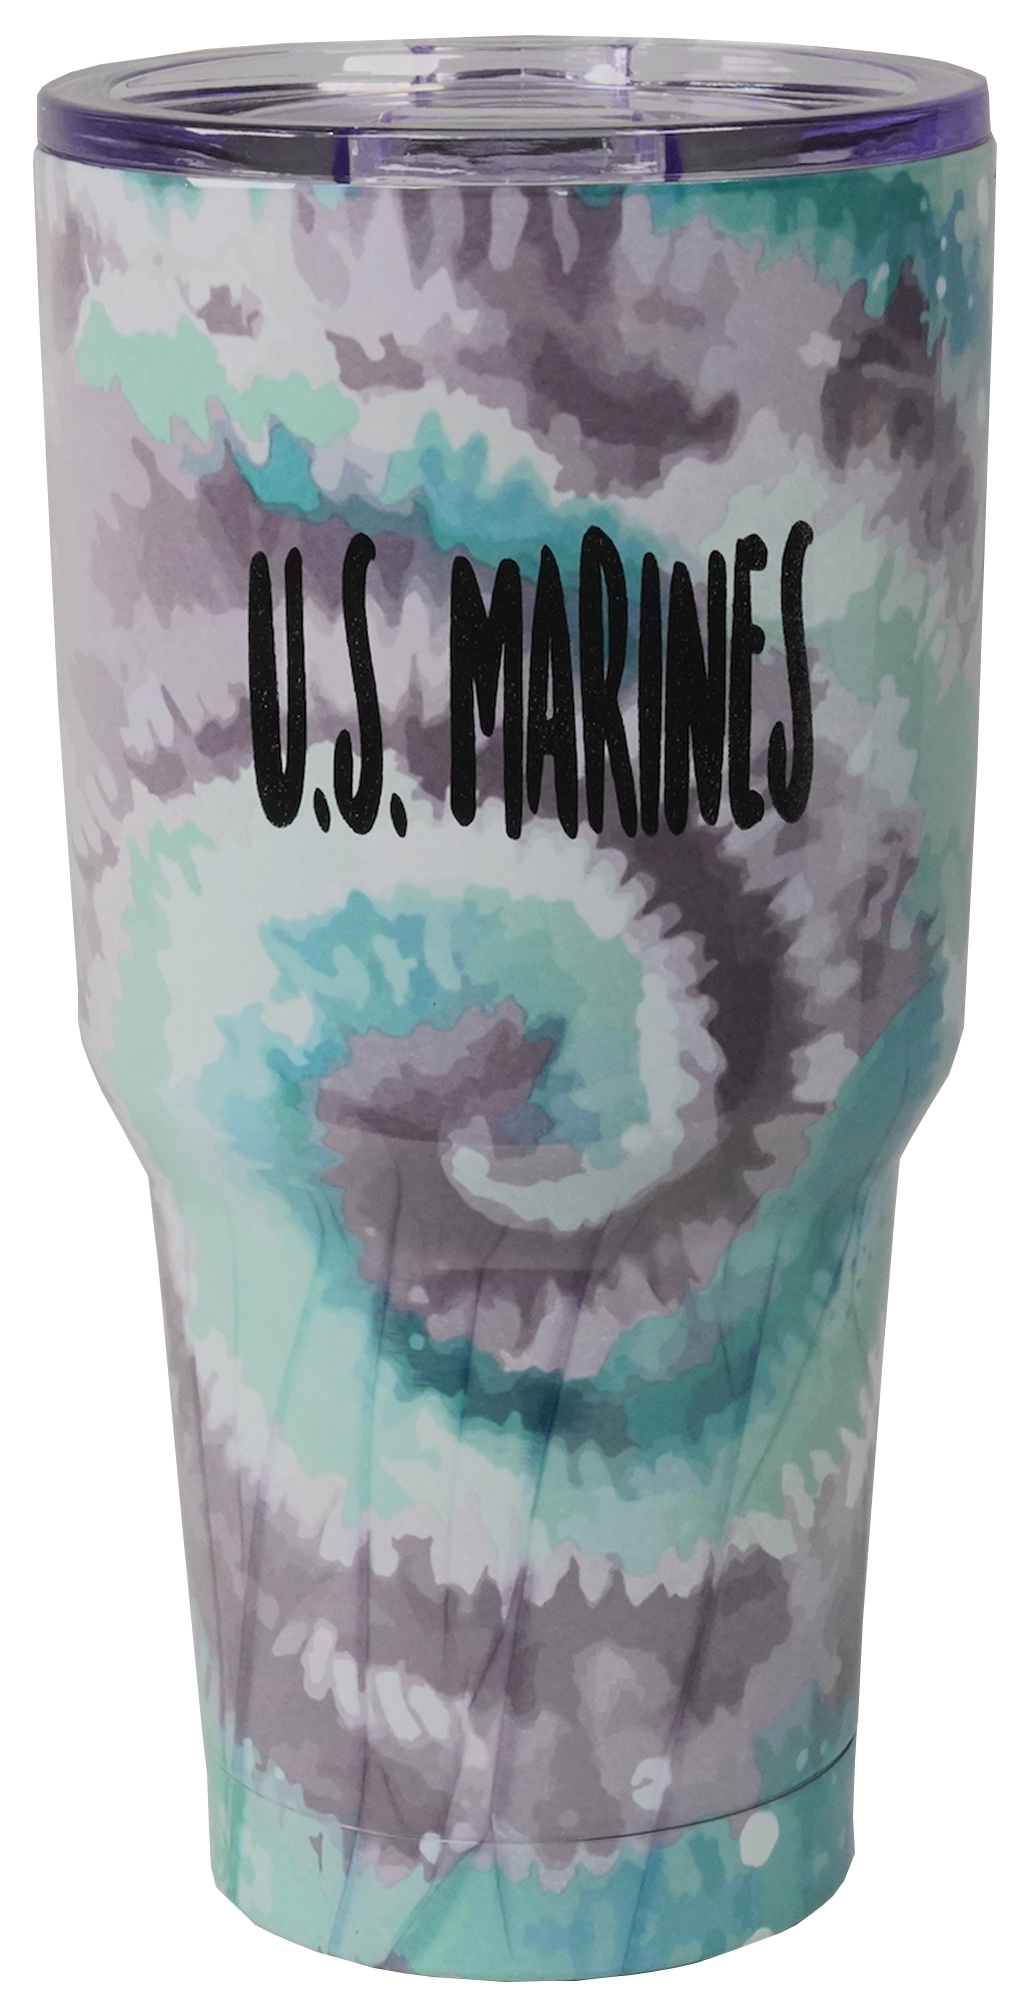 U.S. Marines Imprint on Tye Dye Stainless Tumbler - 28 oz.